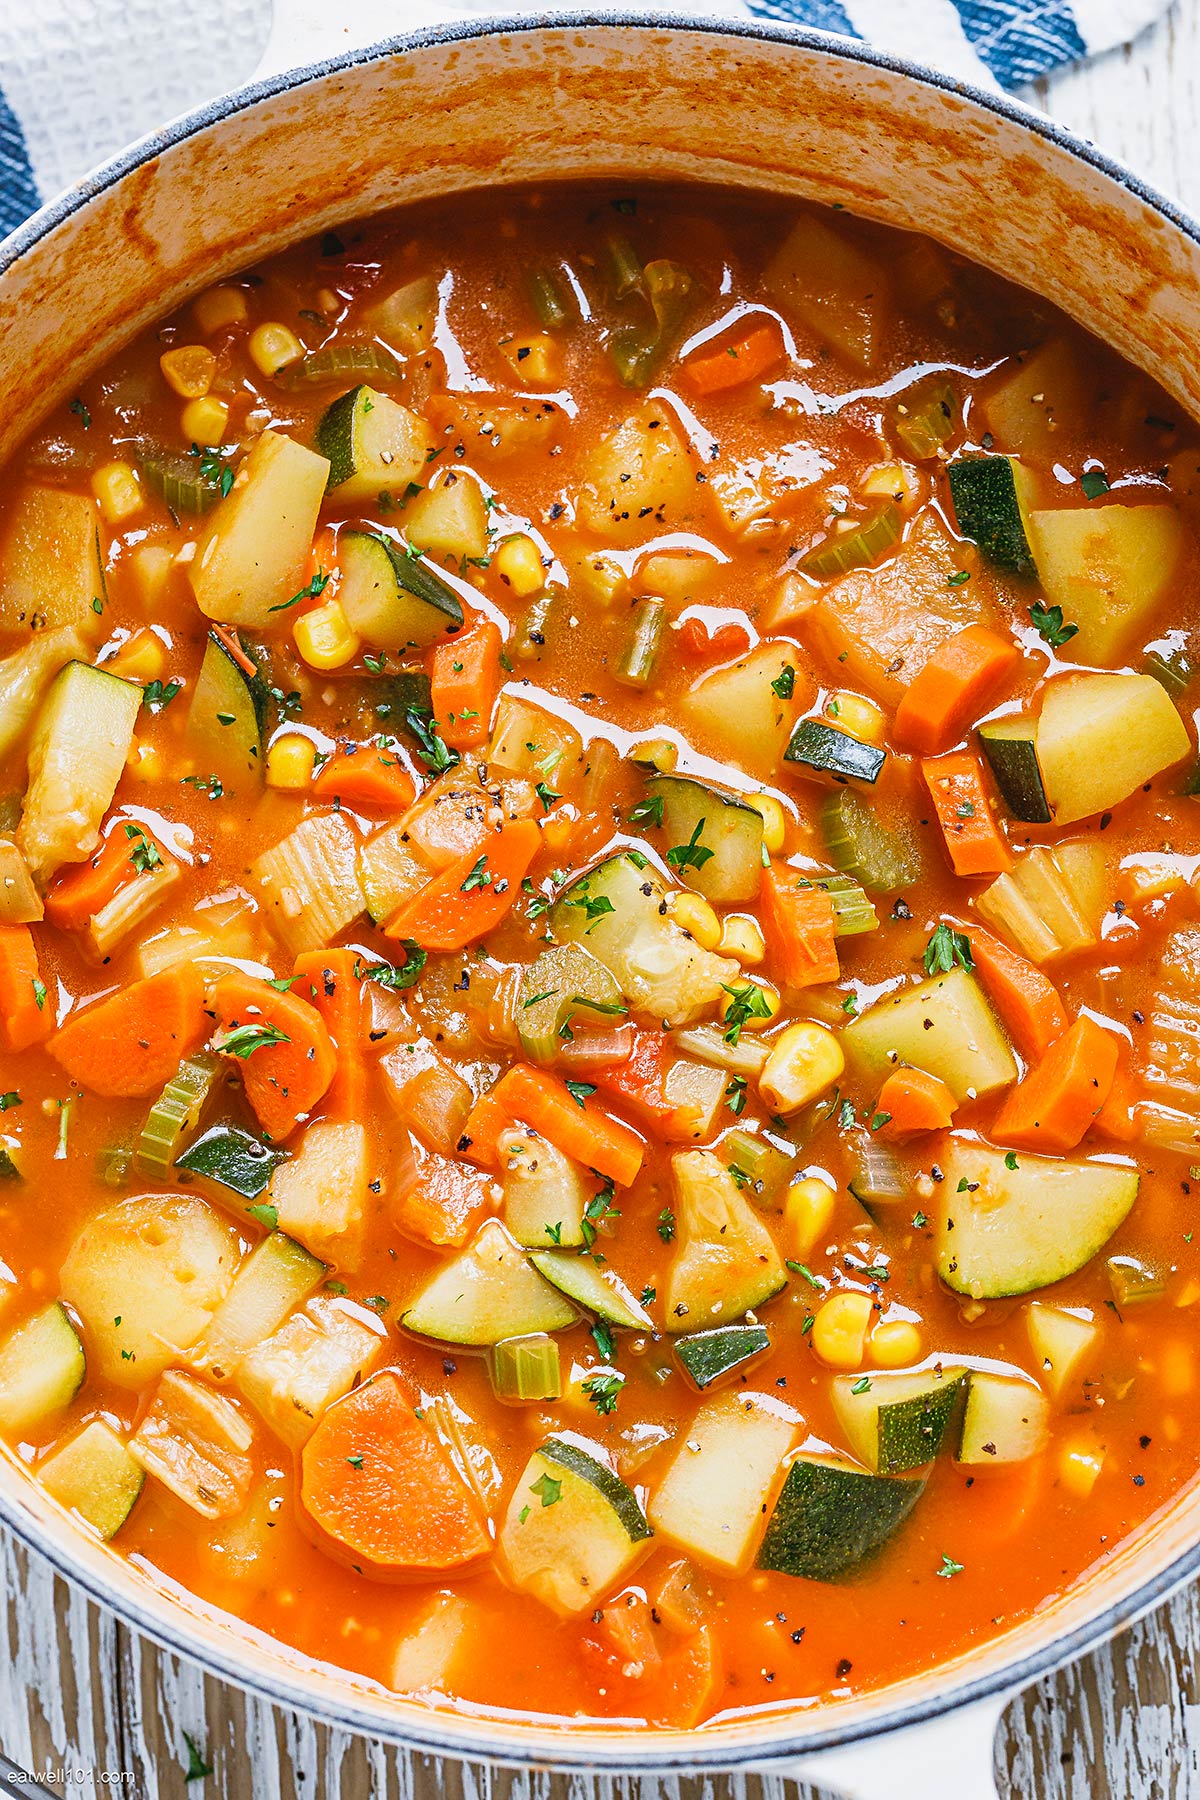 https://www.eatwell101.com/wp-content/uploads/2022/01/homemade-vegetable-soup-recipe.jpg